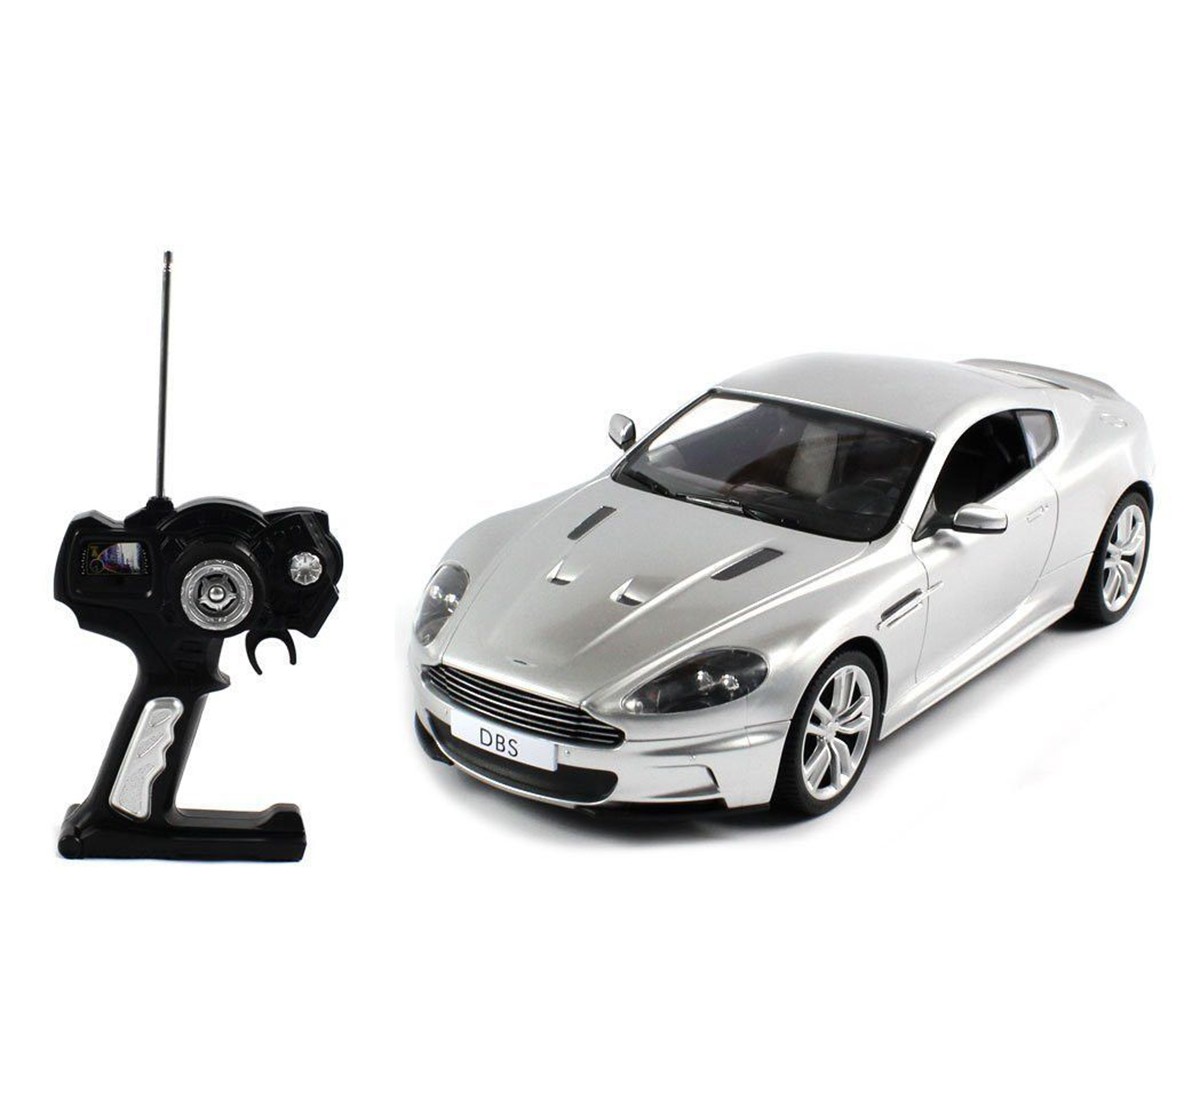 Rw 1:14 Aston Martin Remote Control Car Remote Control Toys for Kids age 6Y+ 